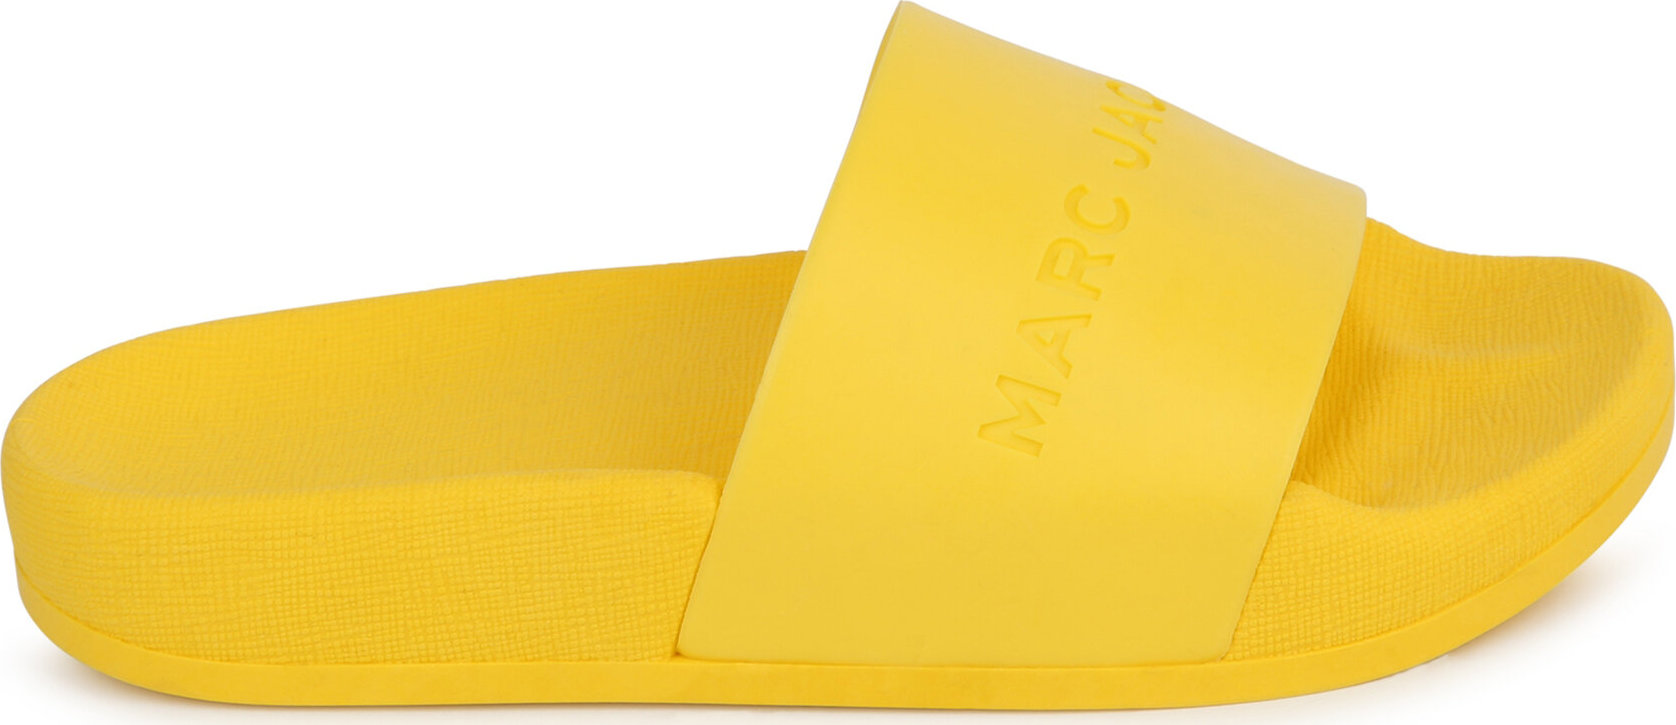 Nazouváky The Marc Jacobs W60130 M Gold Yellow 577